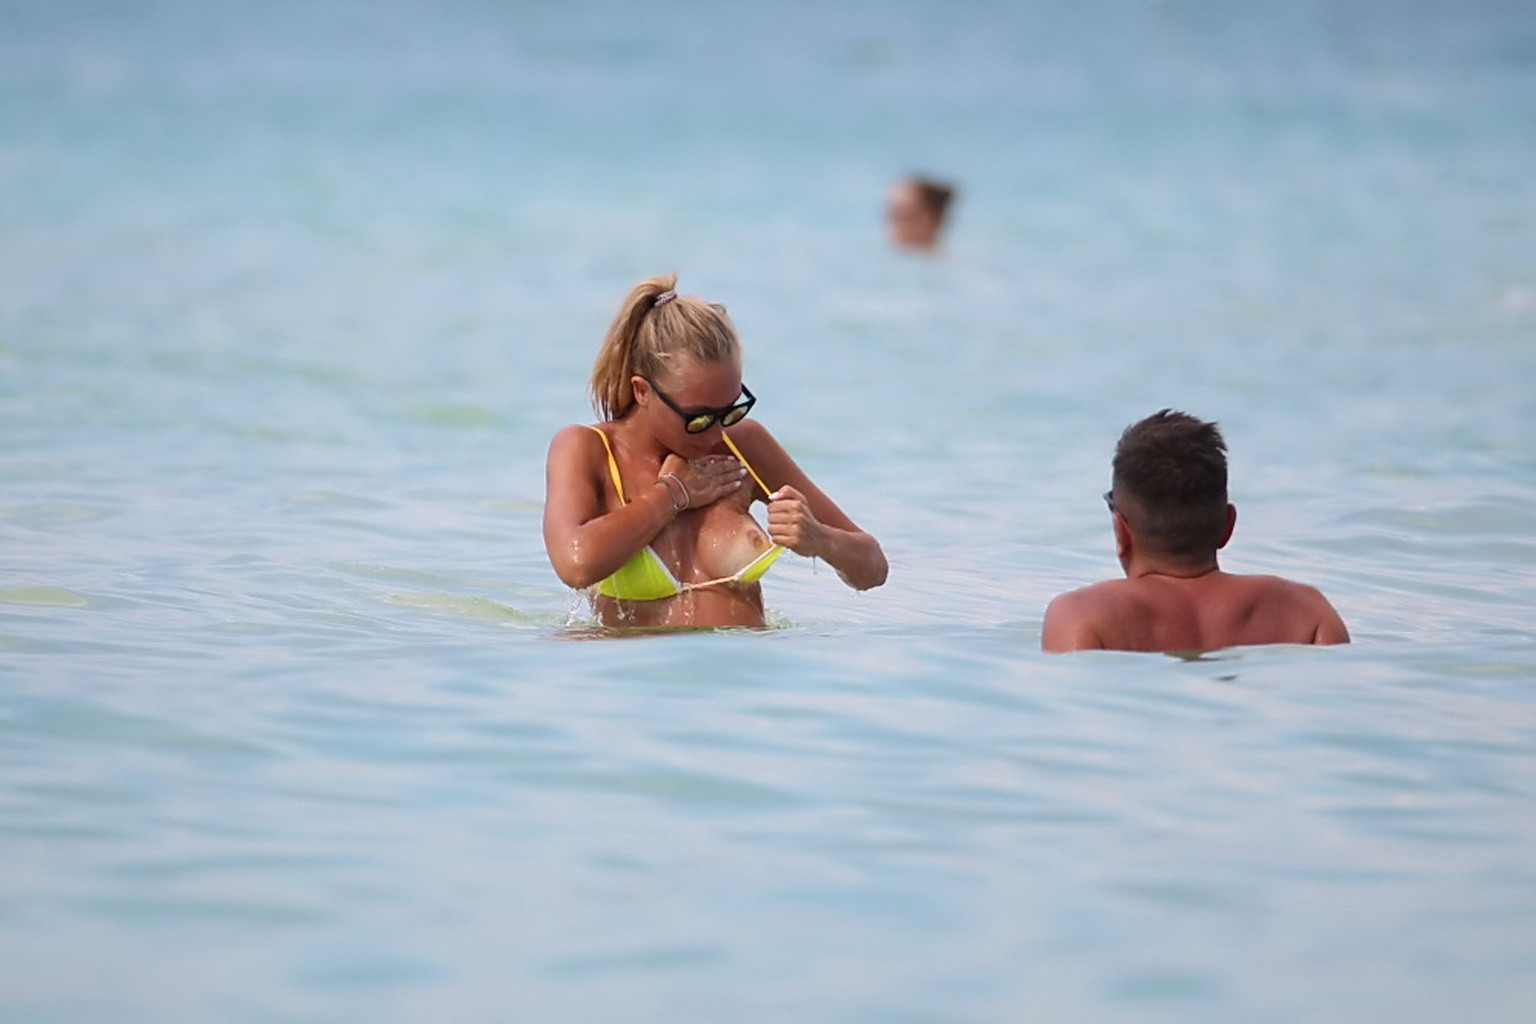 Laura cremaschi seins nus et se faisant peloter dans un bikini string jaune sur une plage i
 #75186943